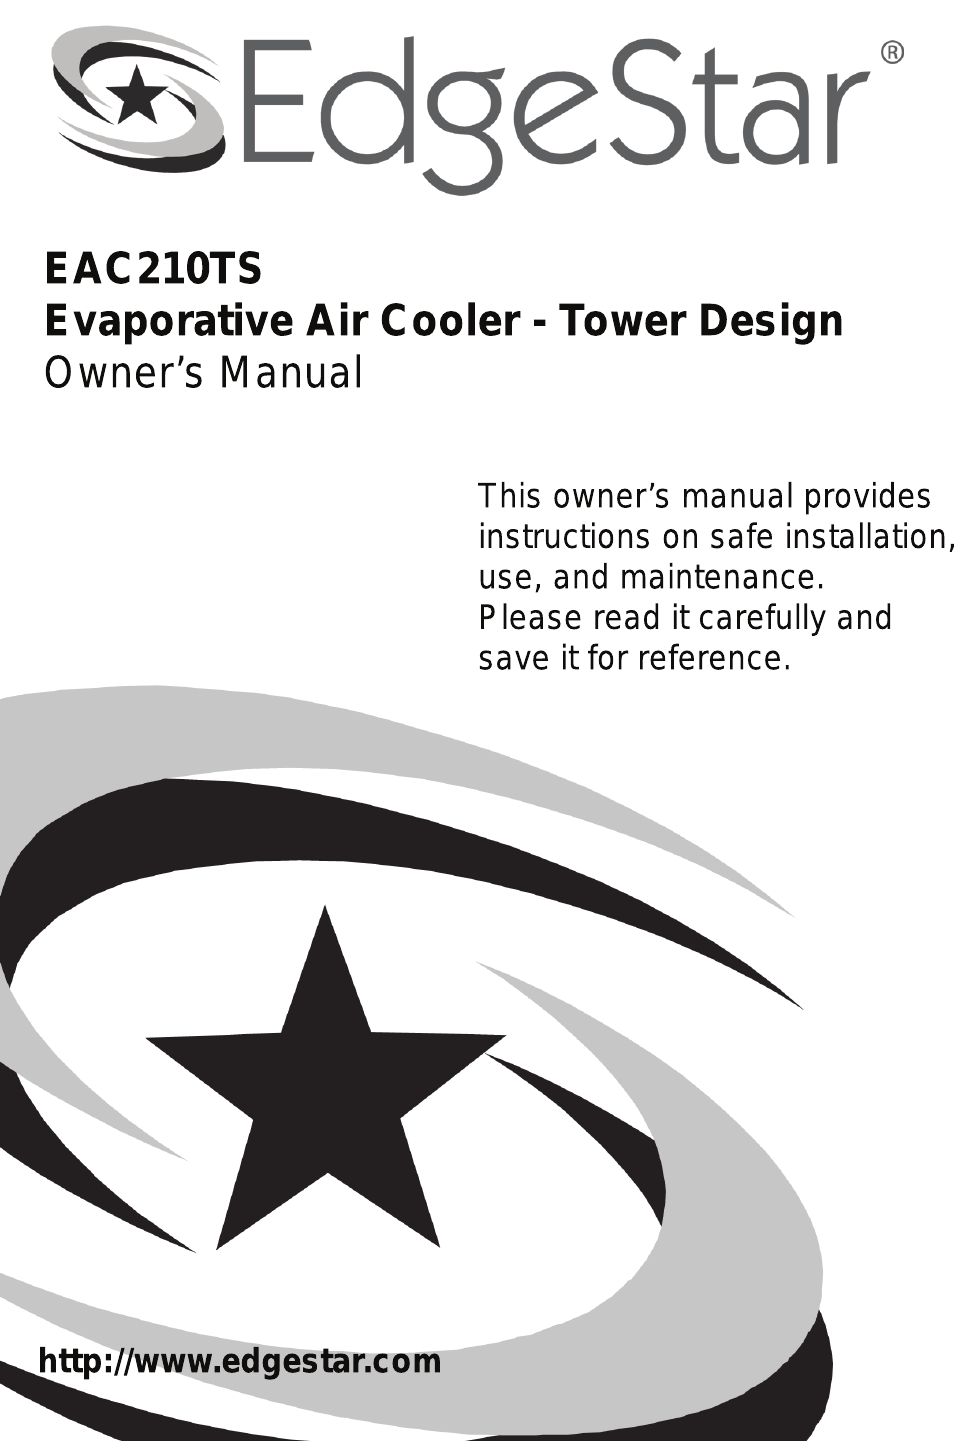 Evaporative Air Cooler - Tower Design EAC210TS